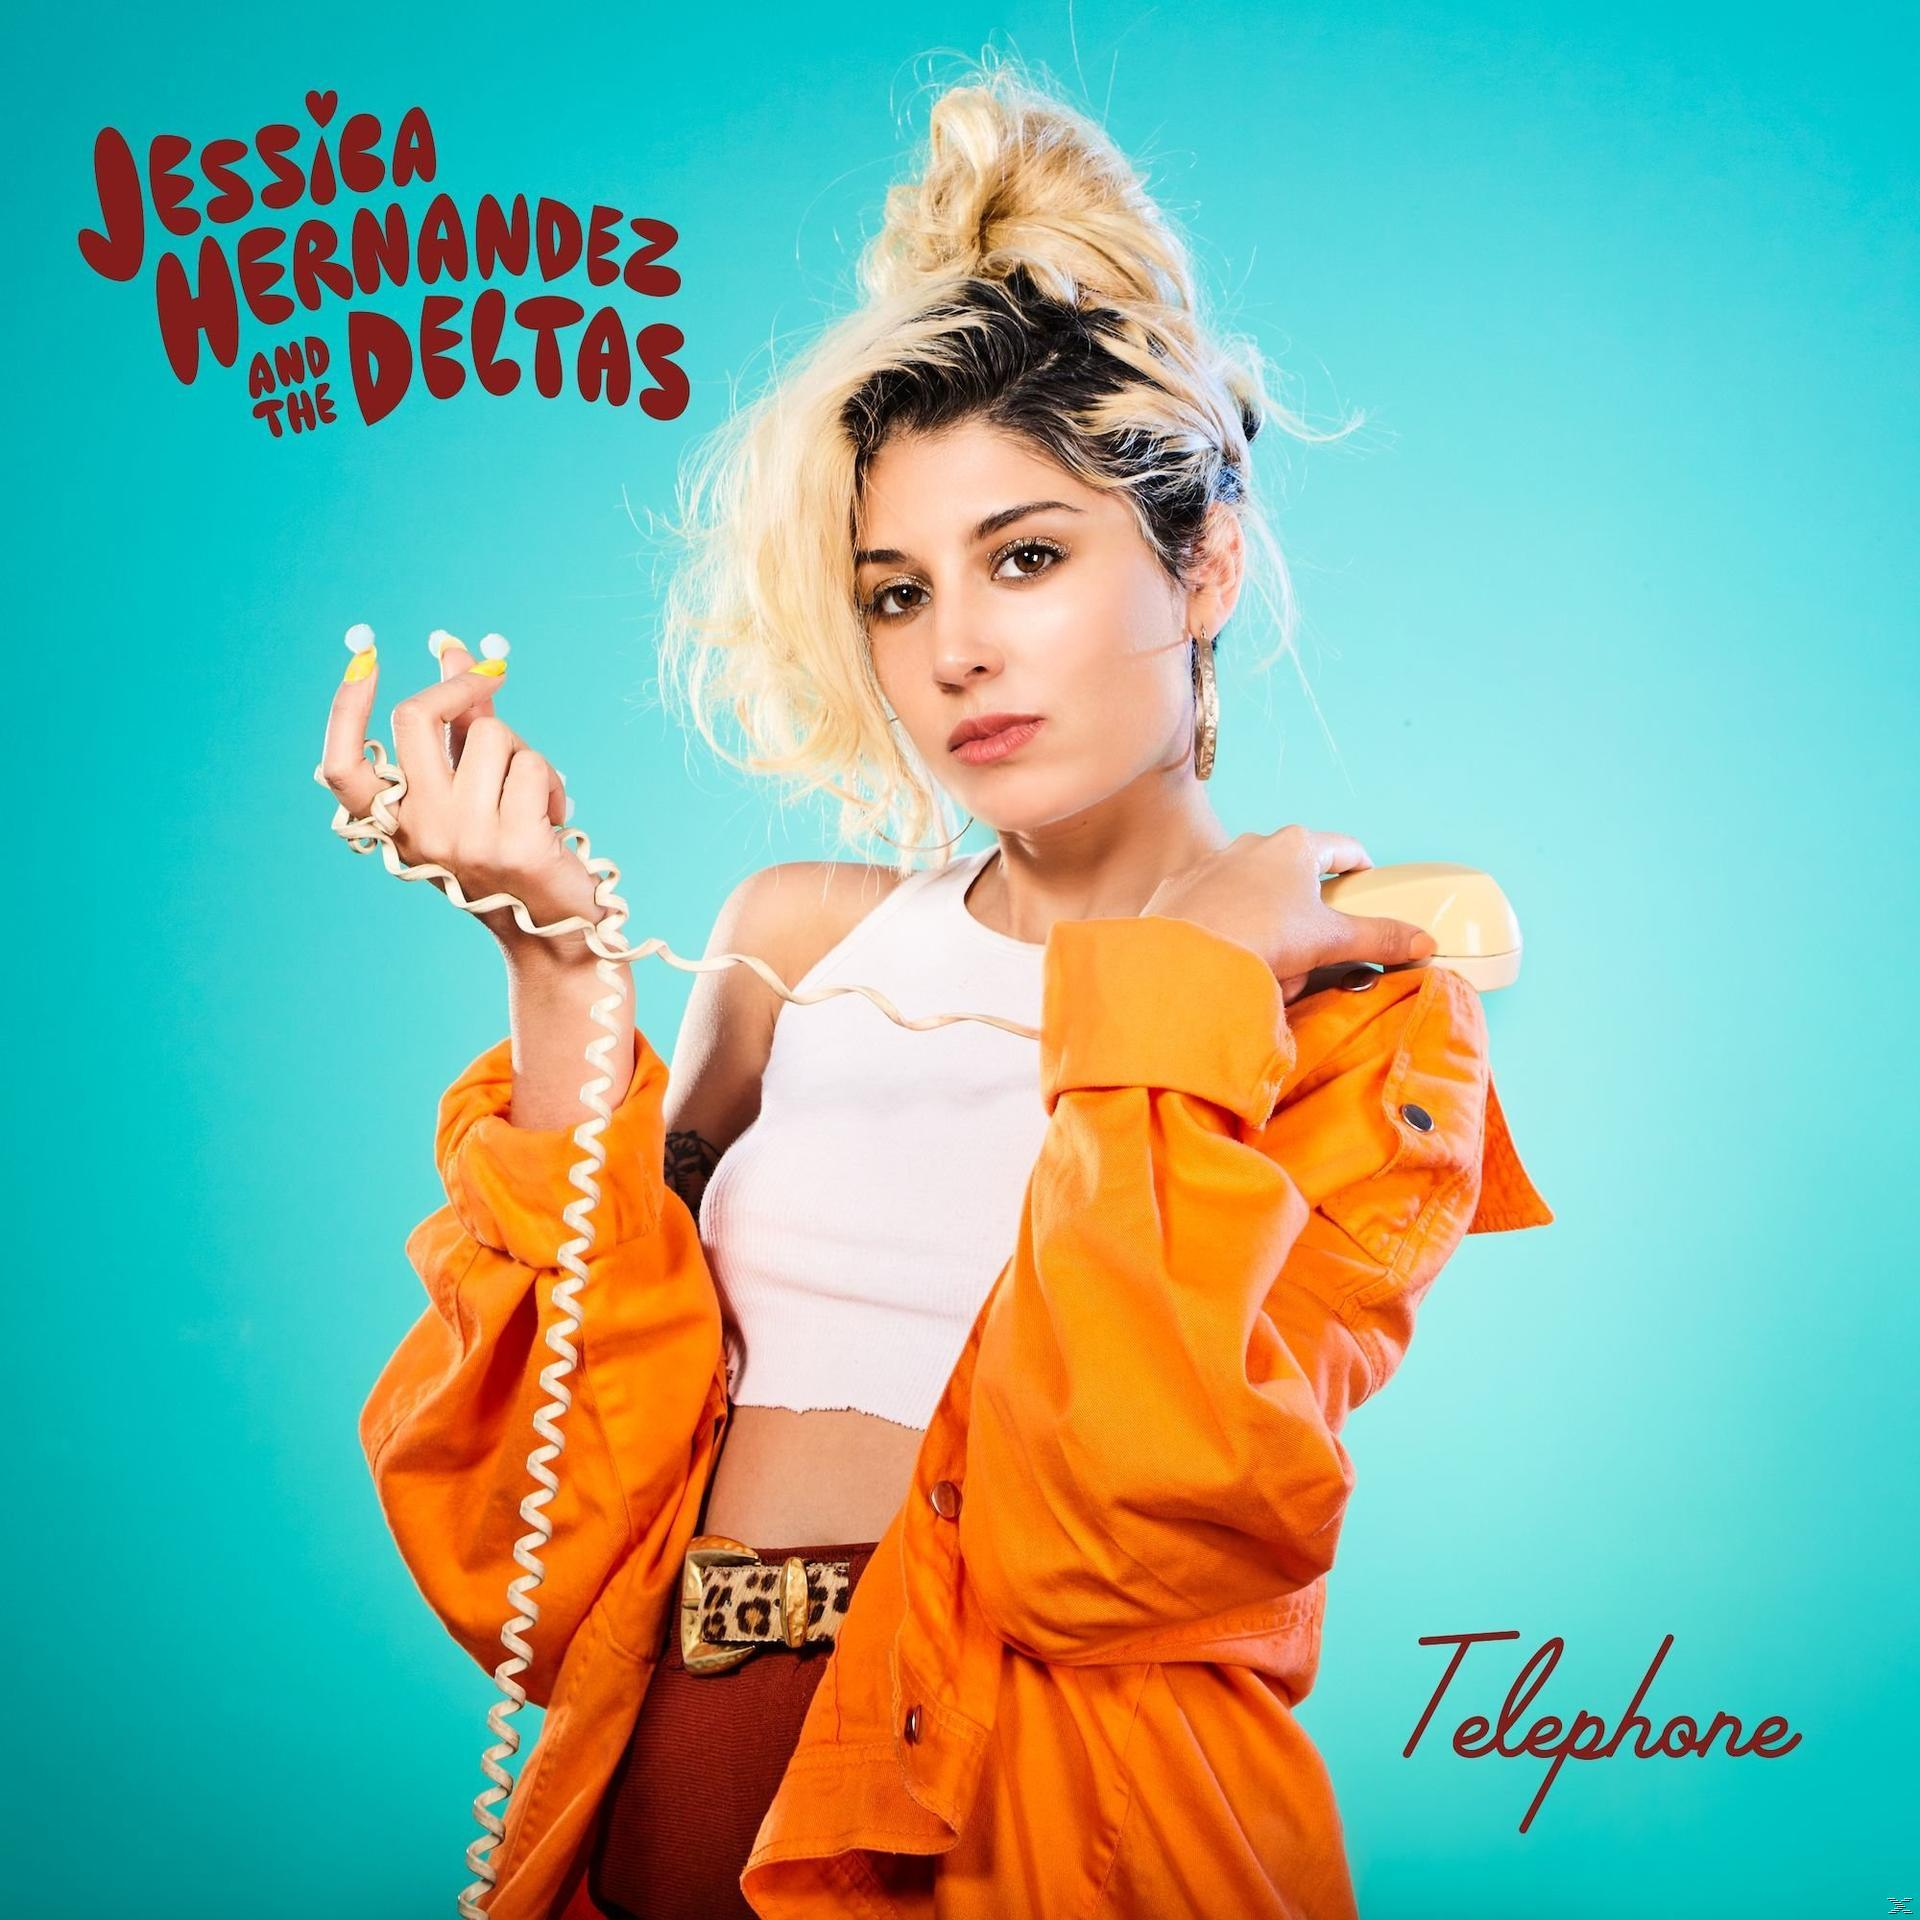 Hernandez - Jessica The & Telephone - Deltas (Vinyl)